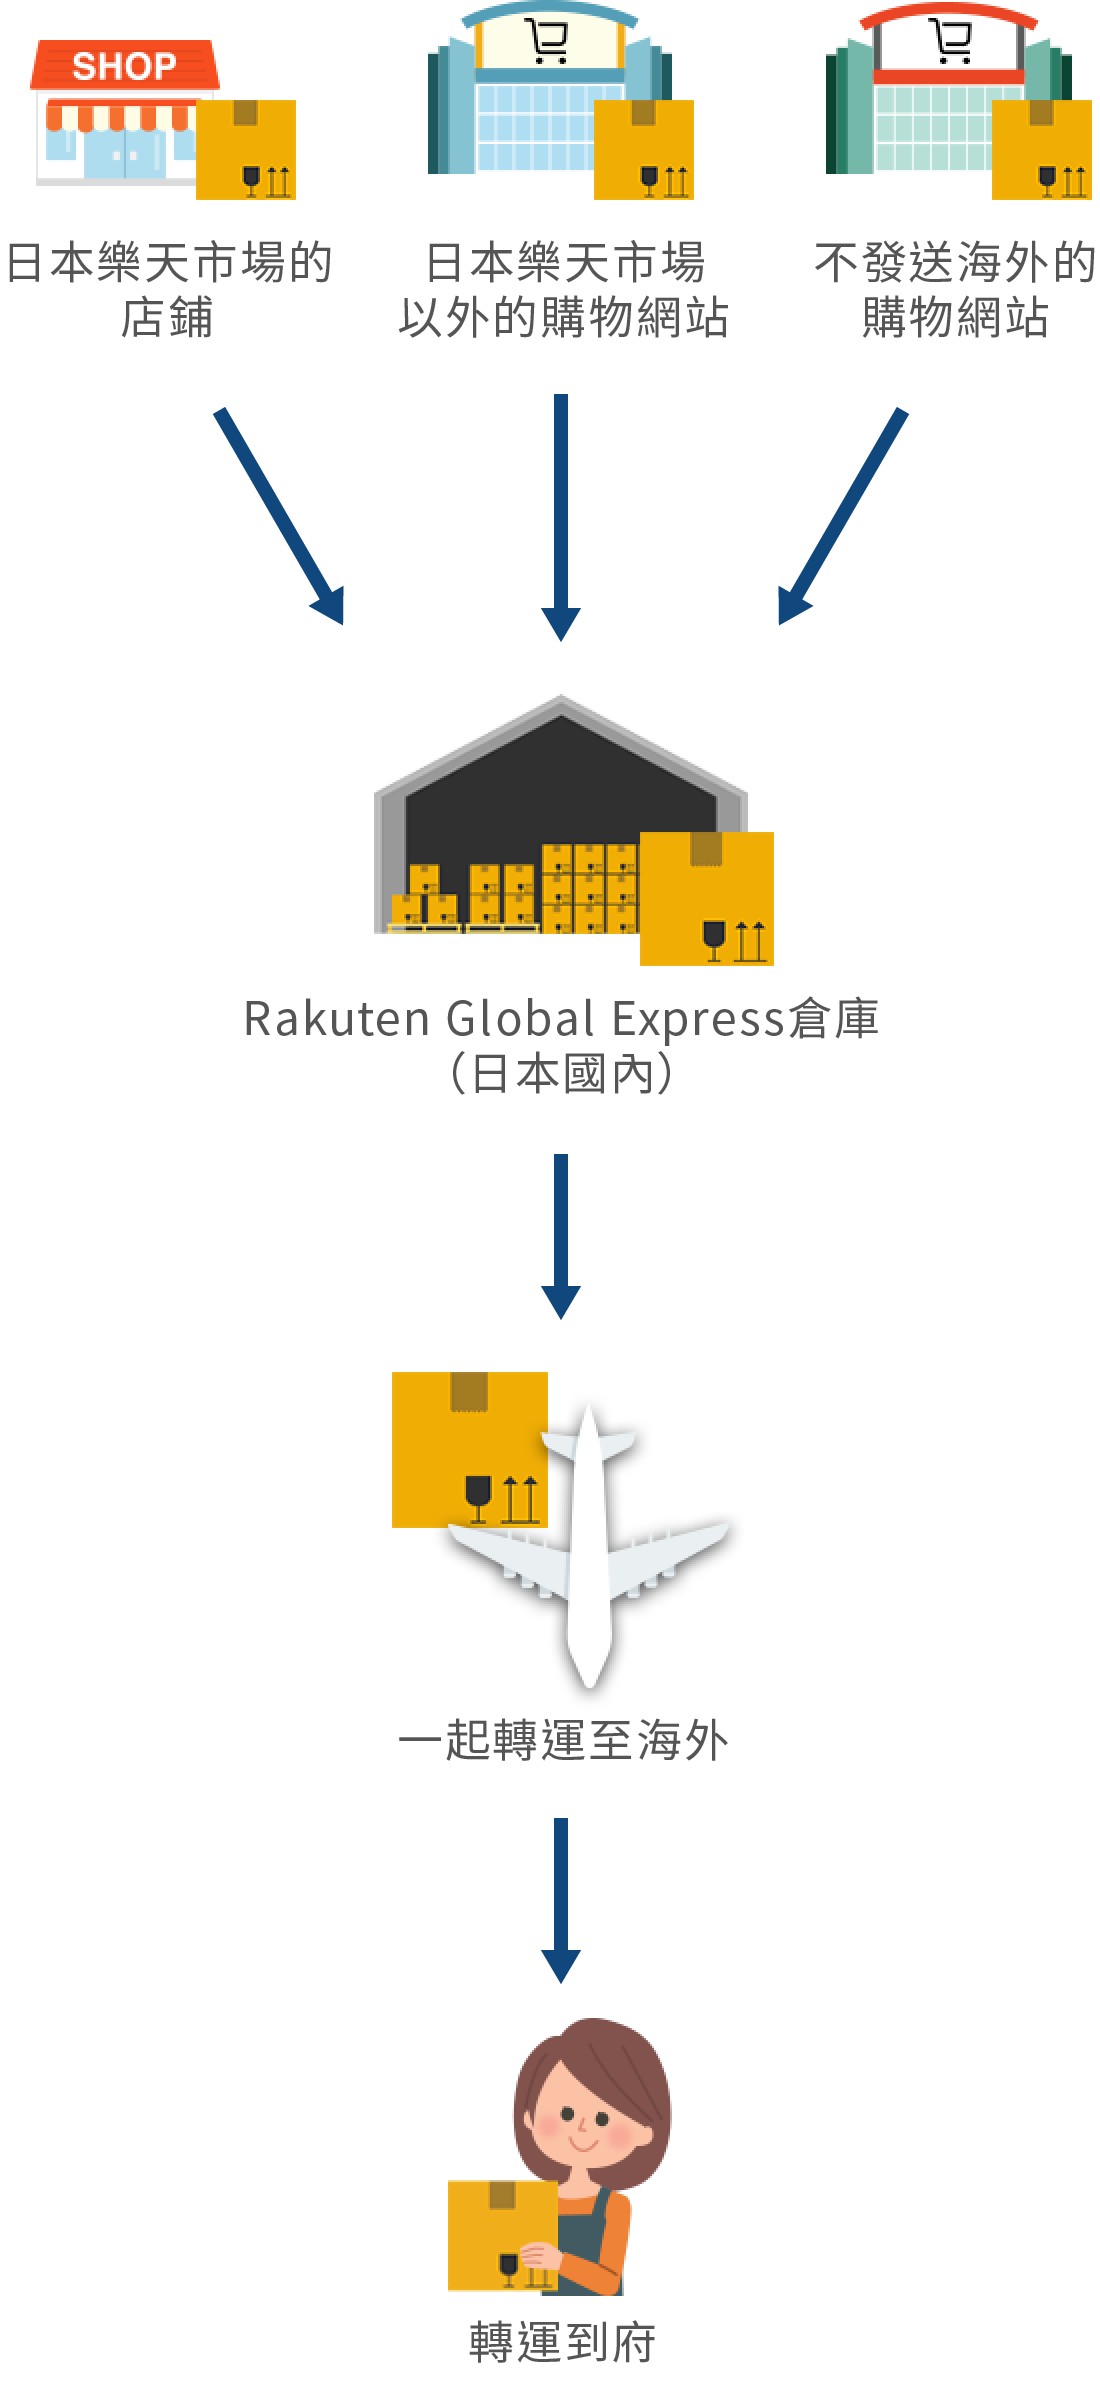 Rakuten Global Express 經濟便捷的海外配送